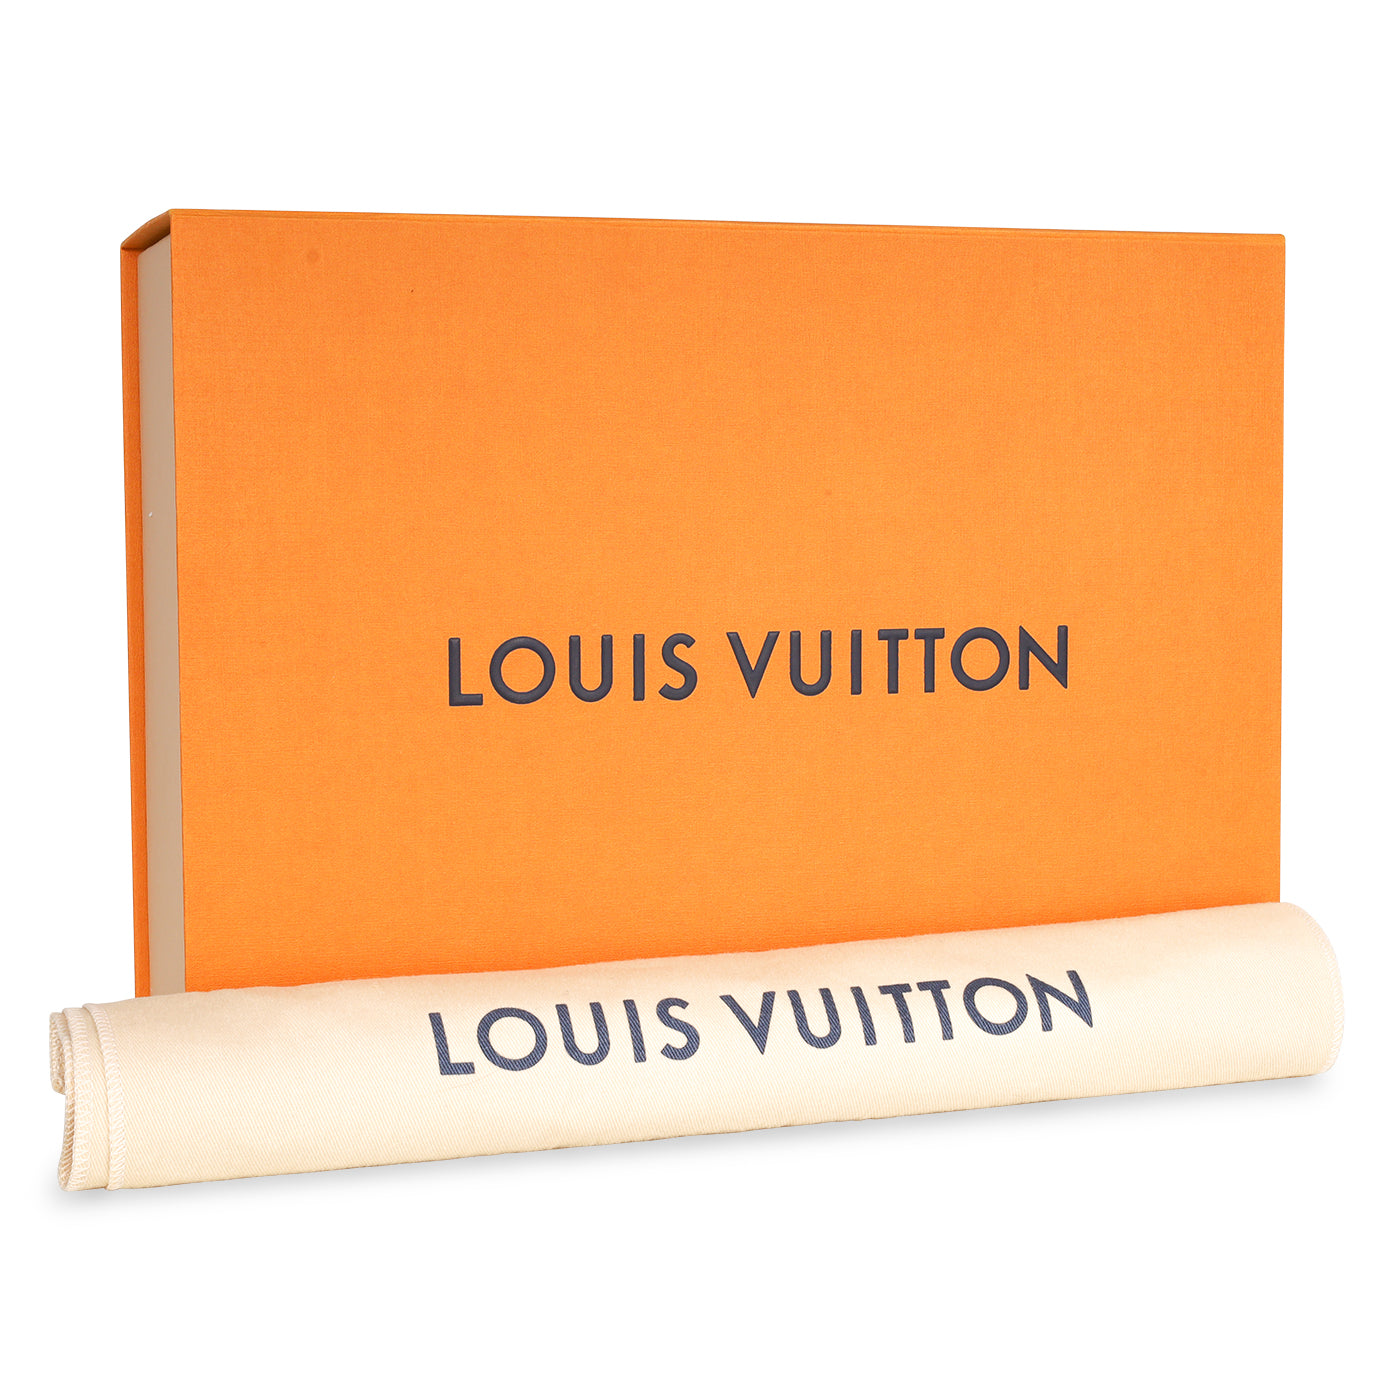 Lv Pochette + Brand packaging + Lv signature Box